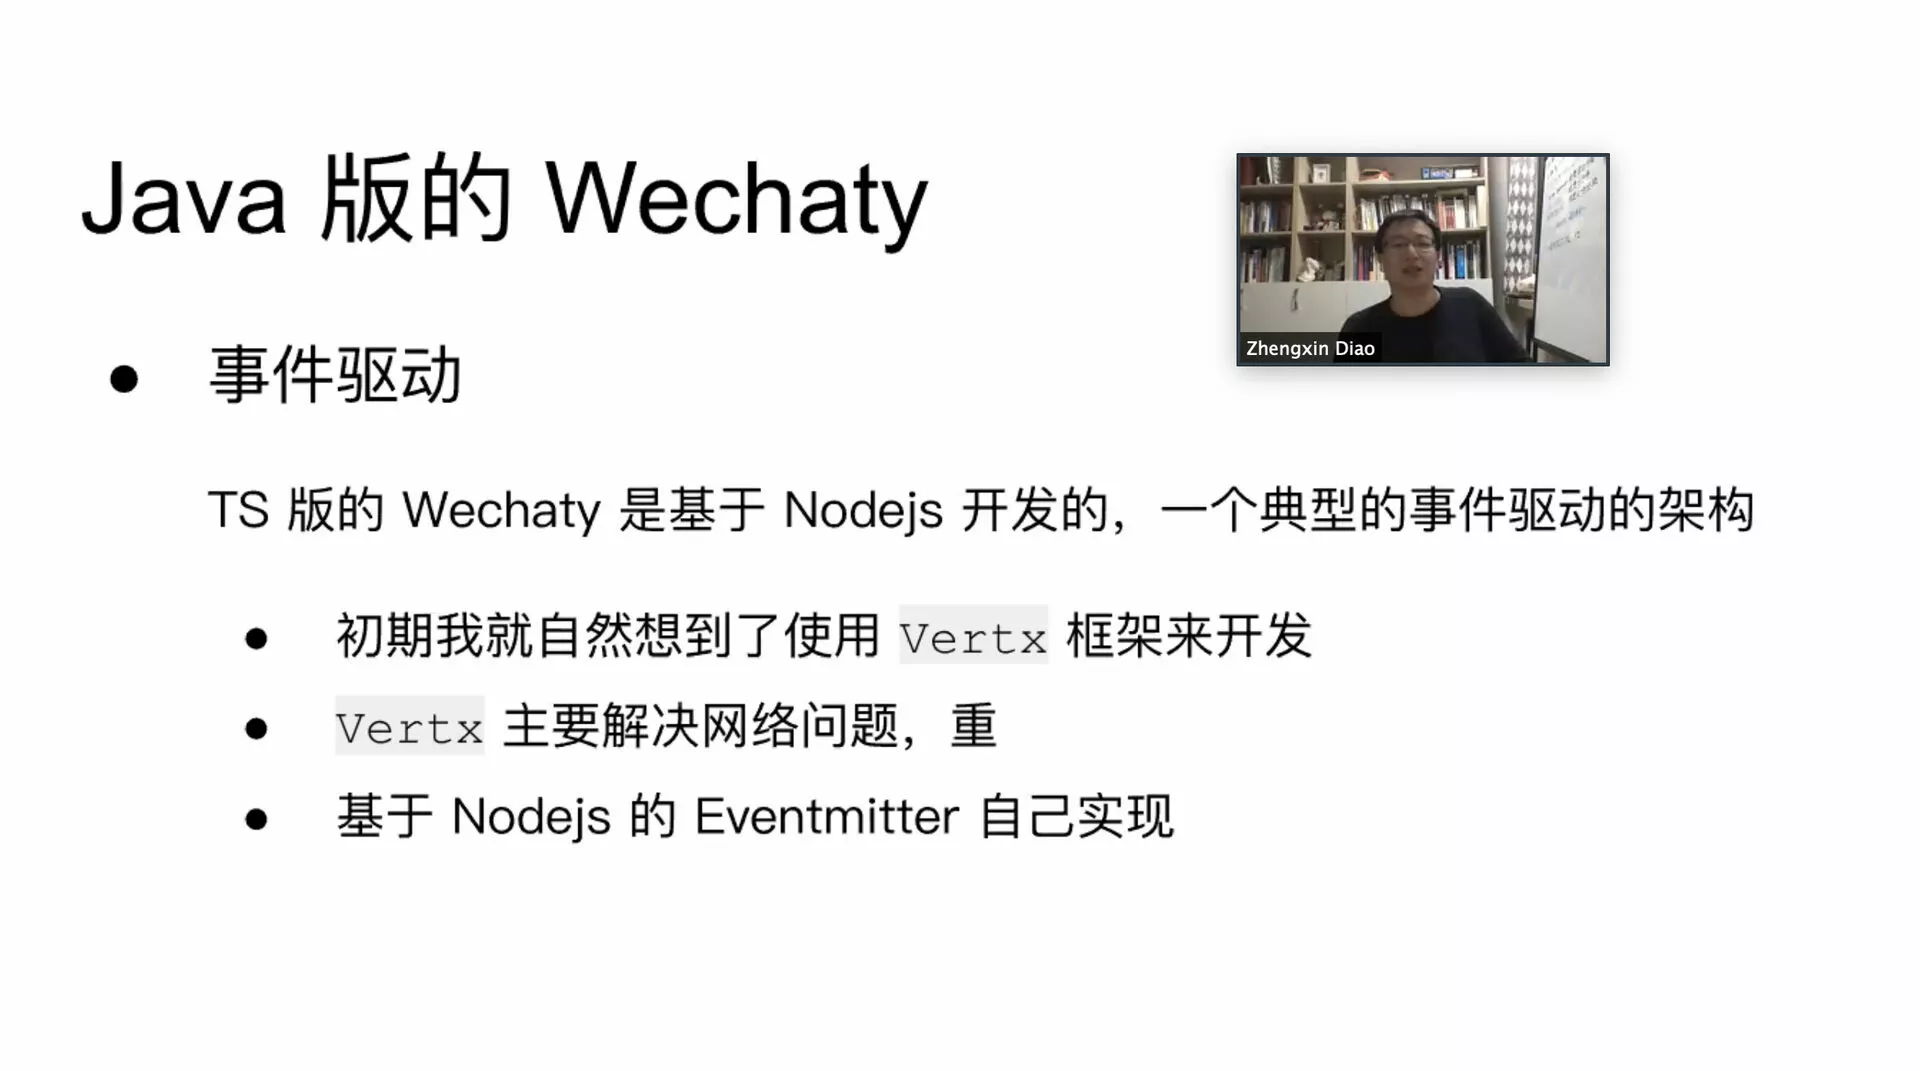 Java Wechaty - Zhengxin DIAO (刁政欣)